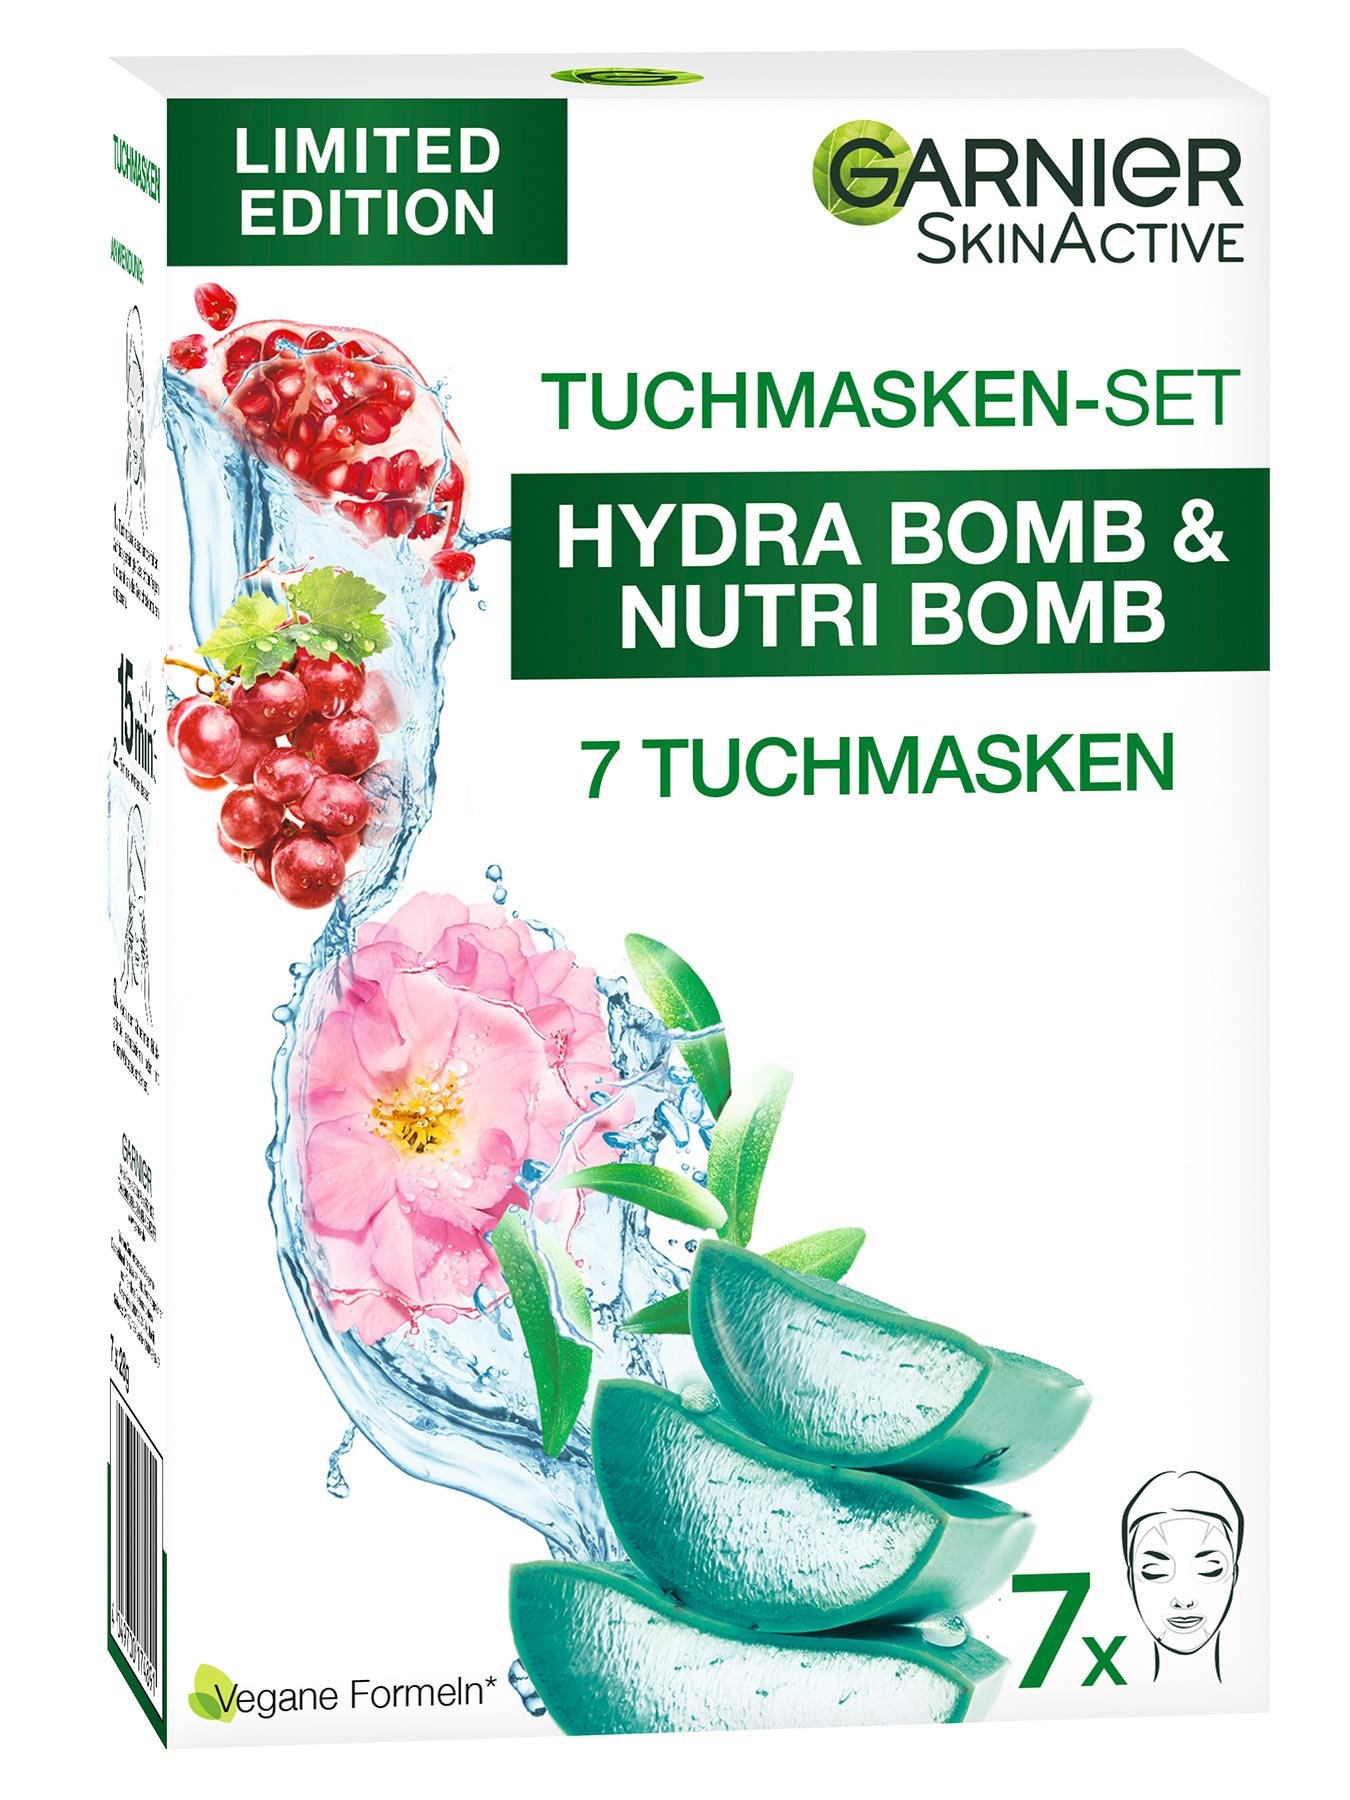 SkinActive Tuchmasken-Set Hydra Bomb & Nutri Bomb| Garnier